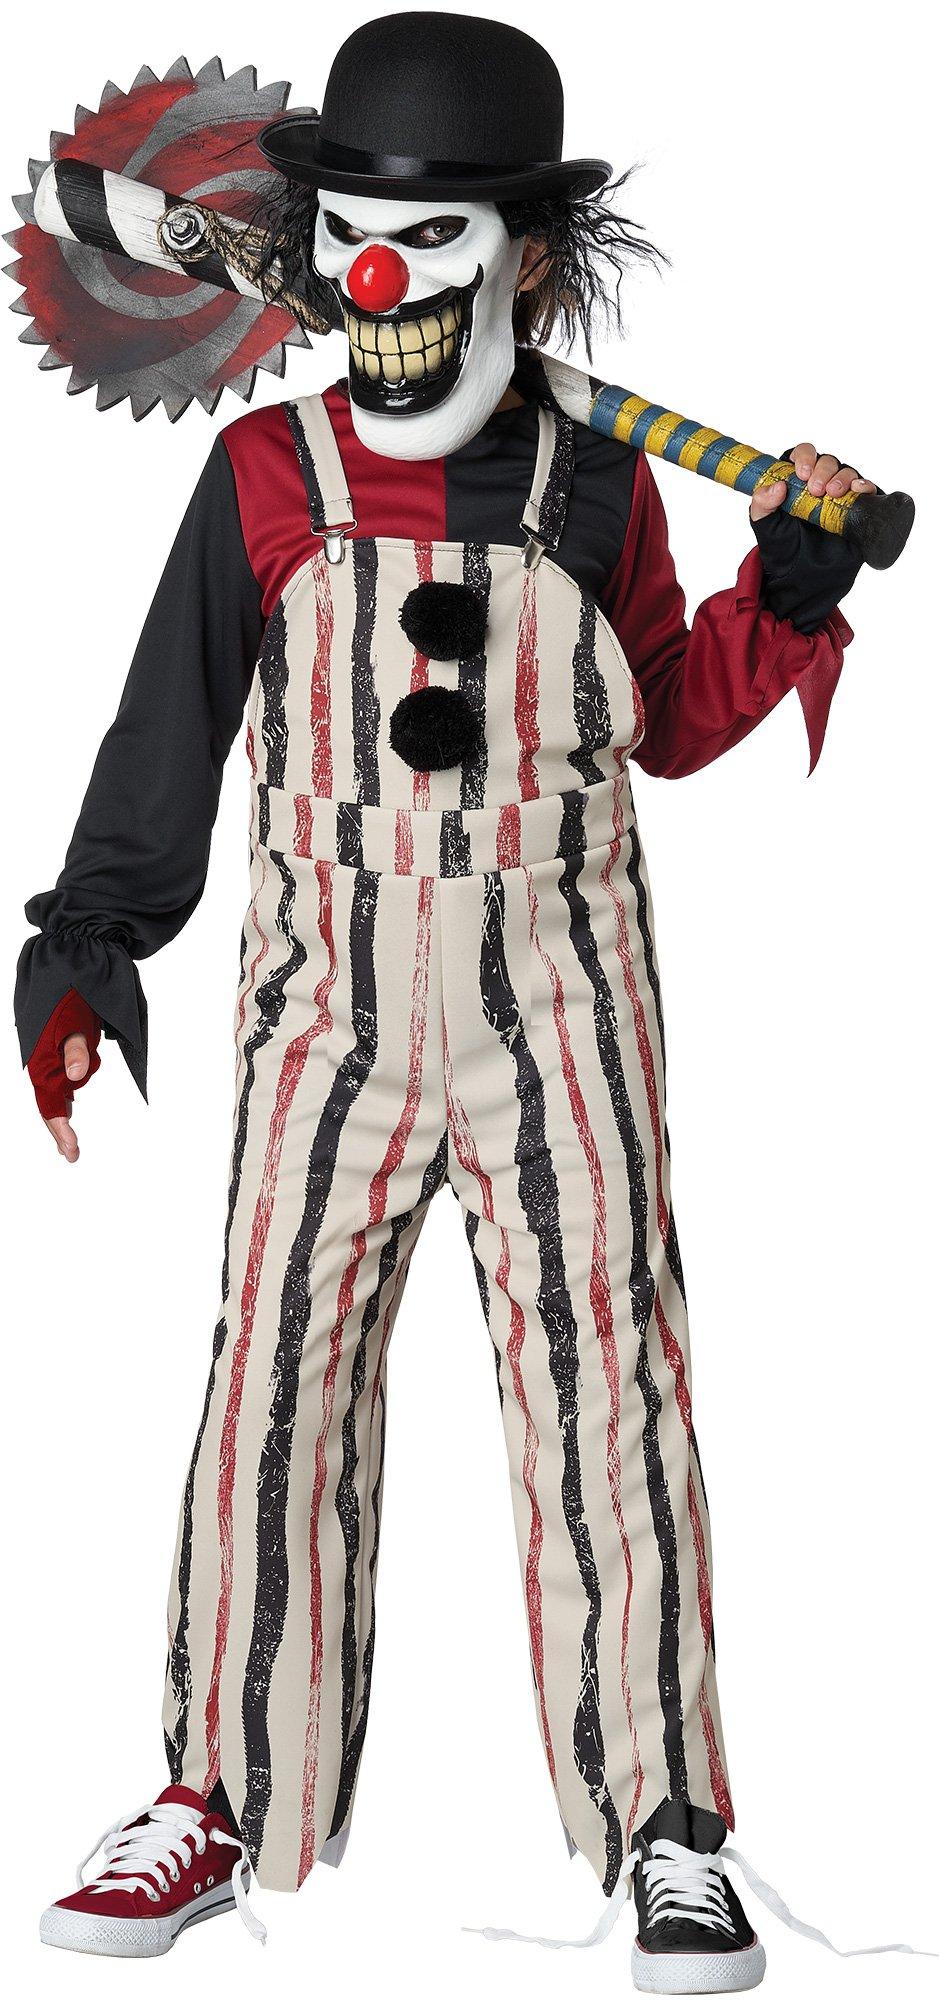 Kids' Carnival Creepster Clown Costume